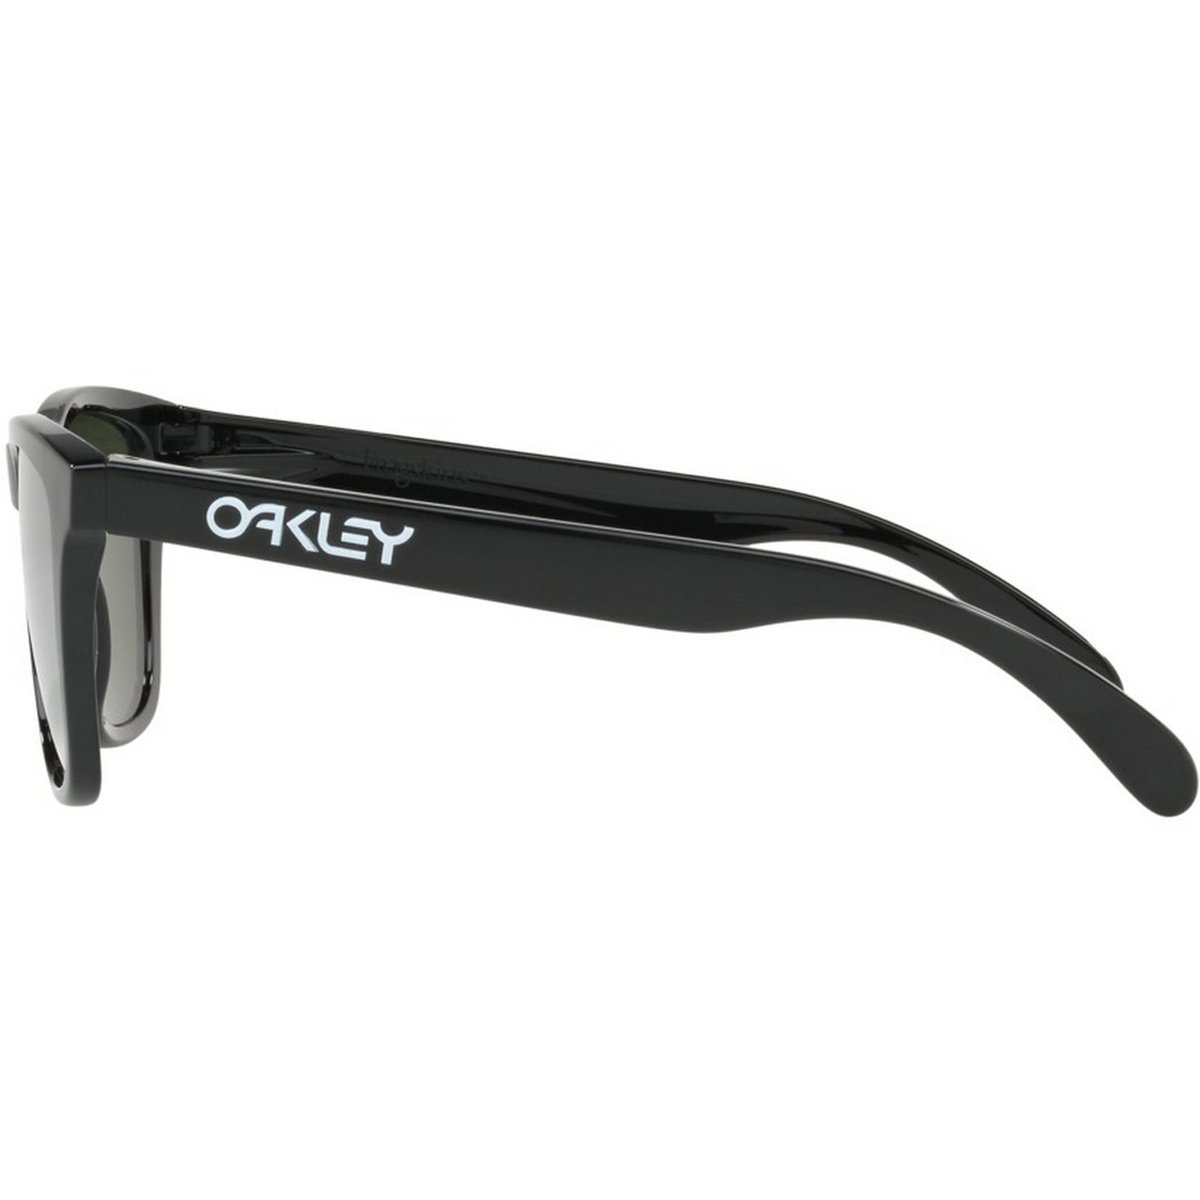 Oakley Unisex Sunglass Wayfarer OK-9013-9013C4